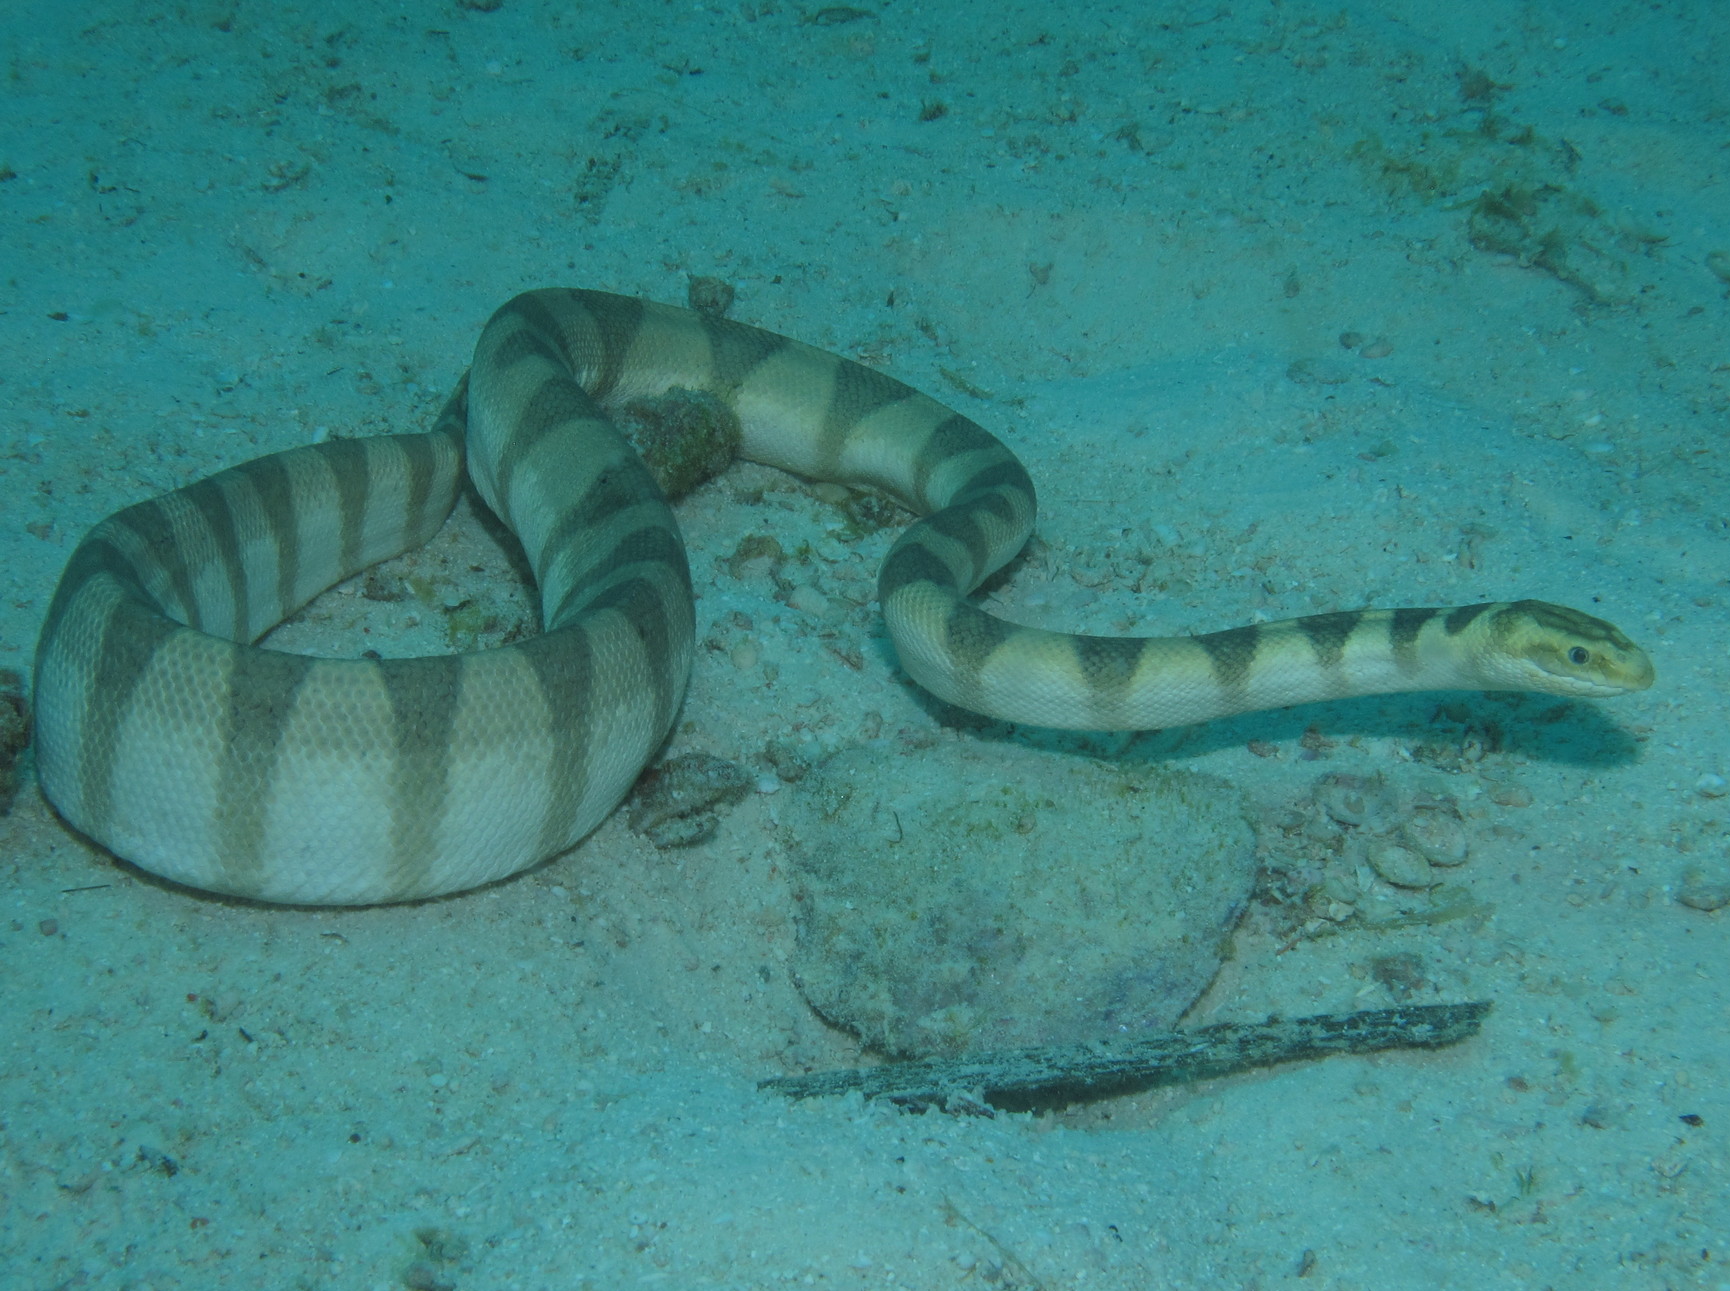 amphibious snakes